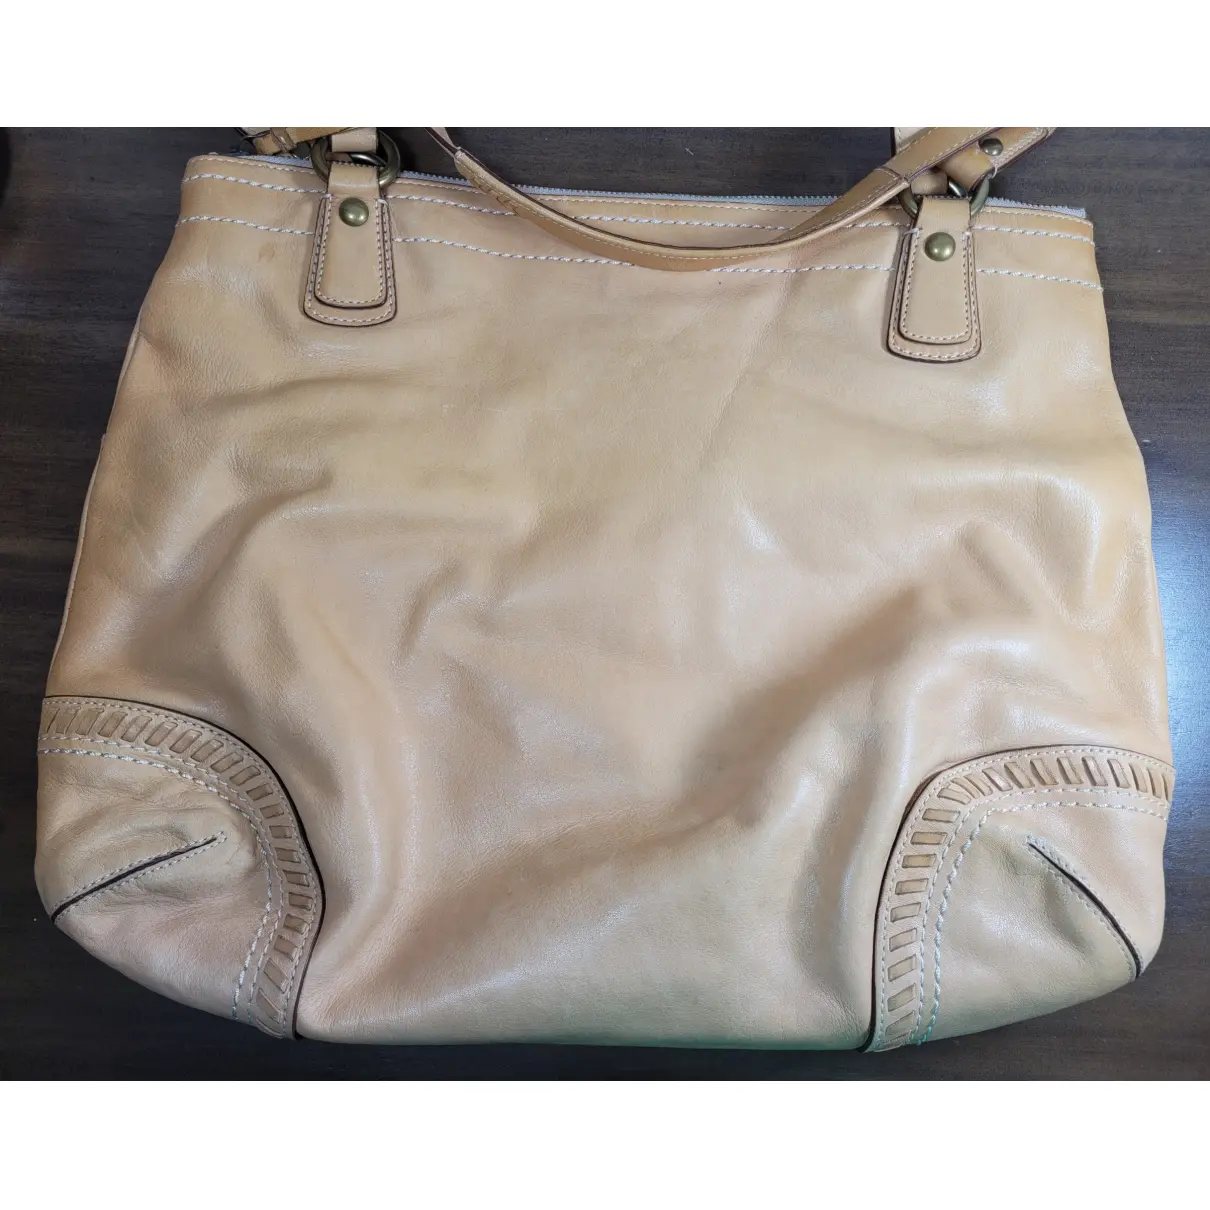 Buy Coach Hamilton Hobo leather handbag online